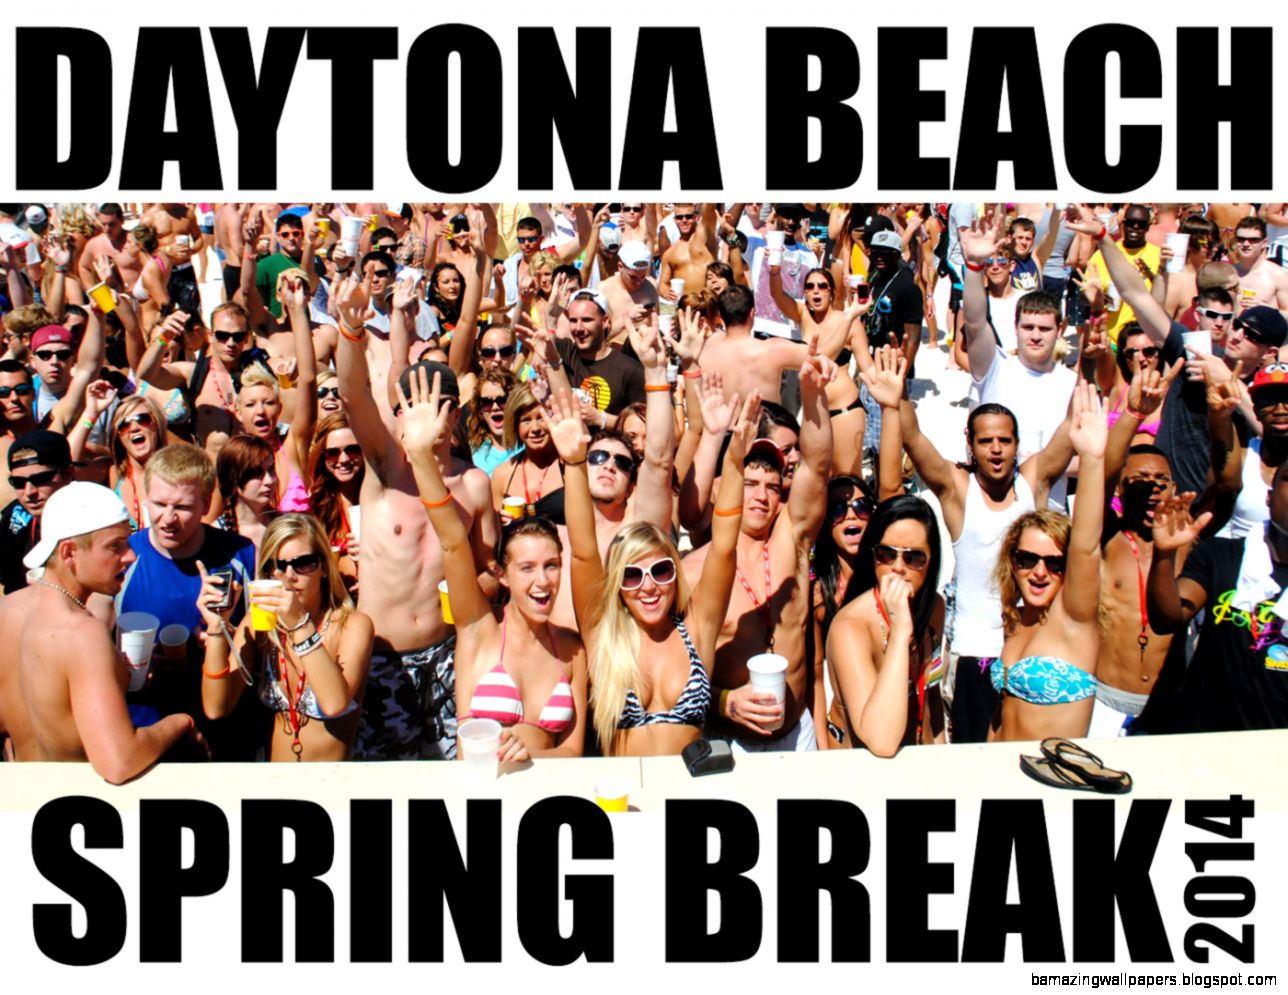 Daytona Beach Spring Break 2014 Wallpaper Daytona Beach - Beaver Beard - HD Wallpaper 